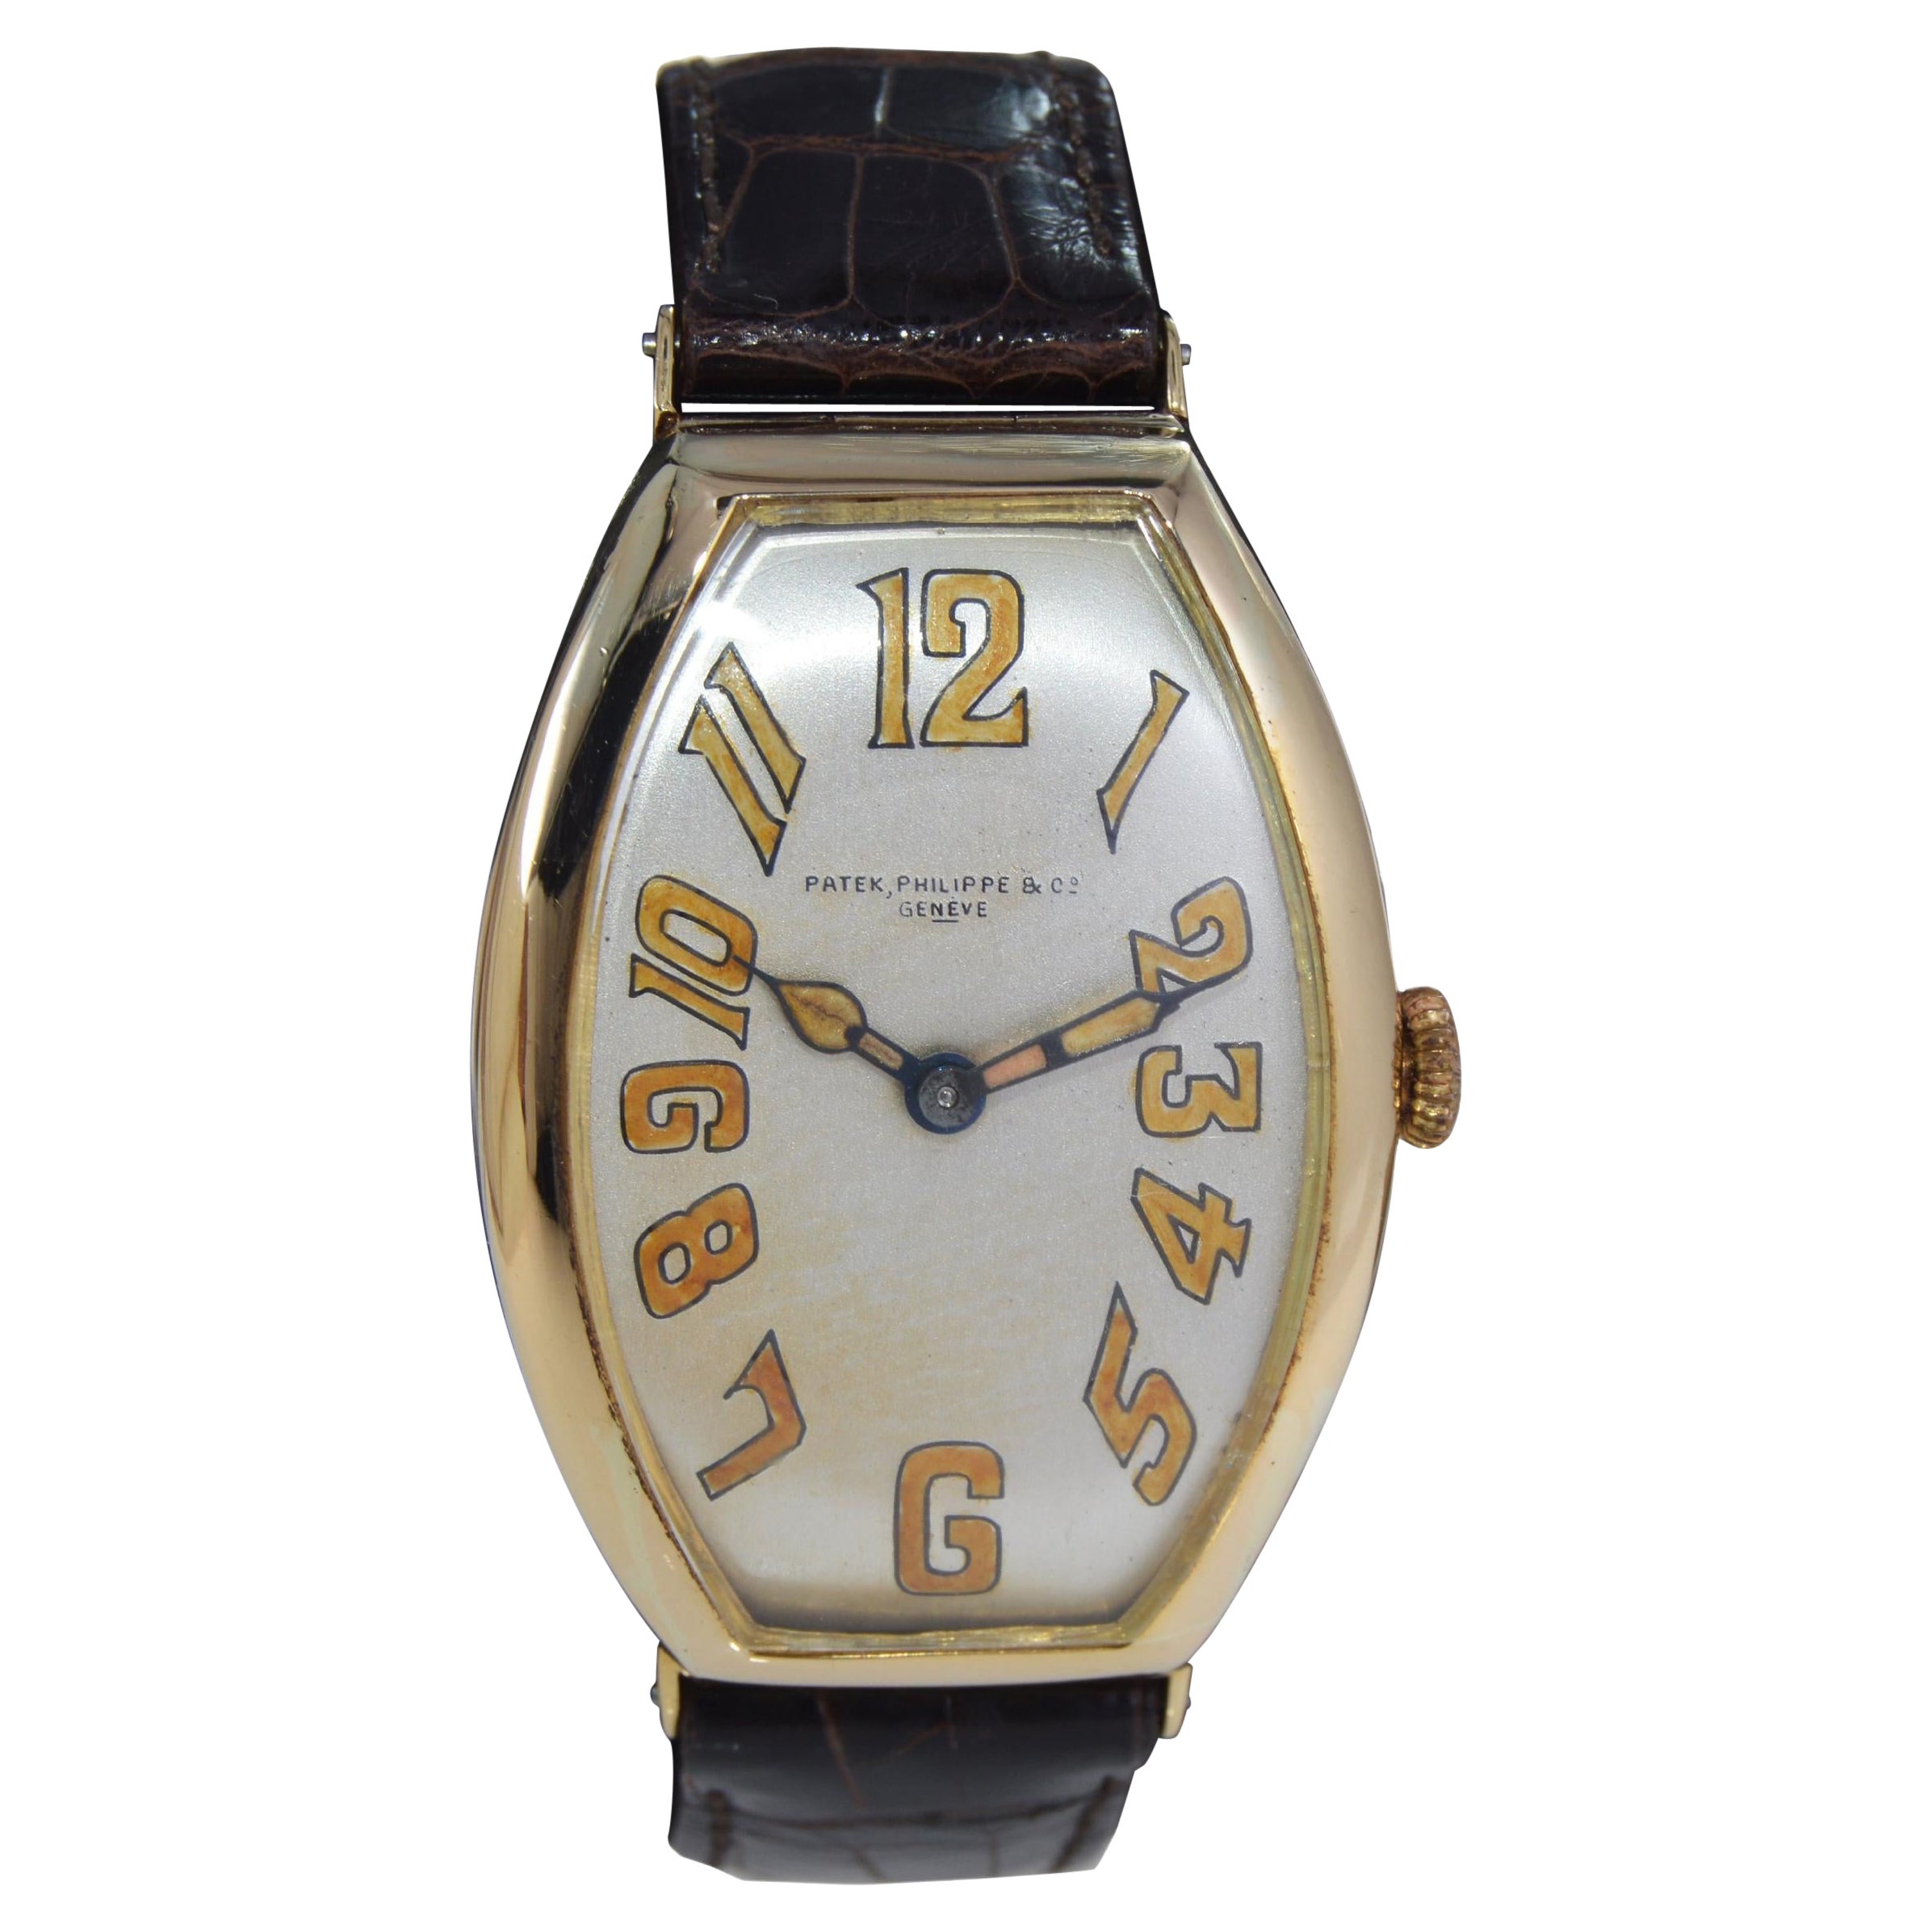 Patek Philippe 18 Kt Yellow Gold Oversized Gondolo Manual Wind Watch from 1923